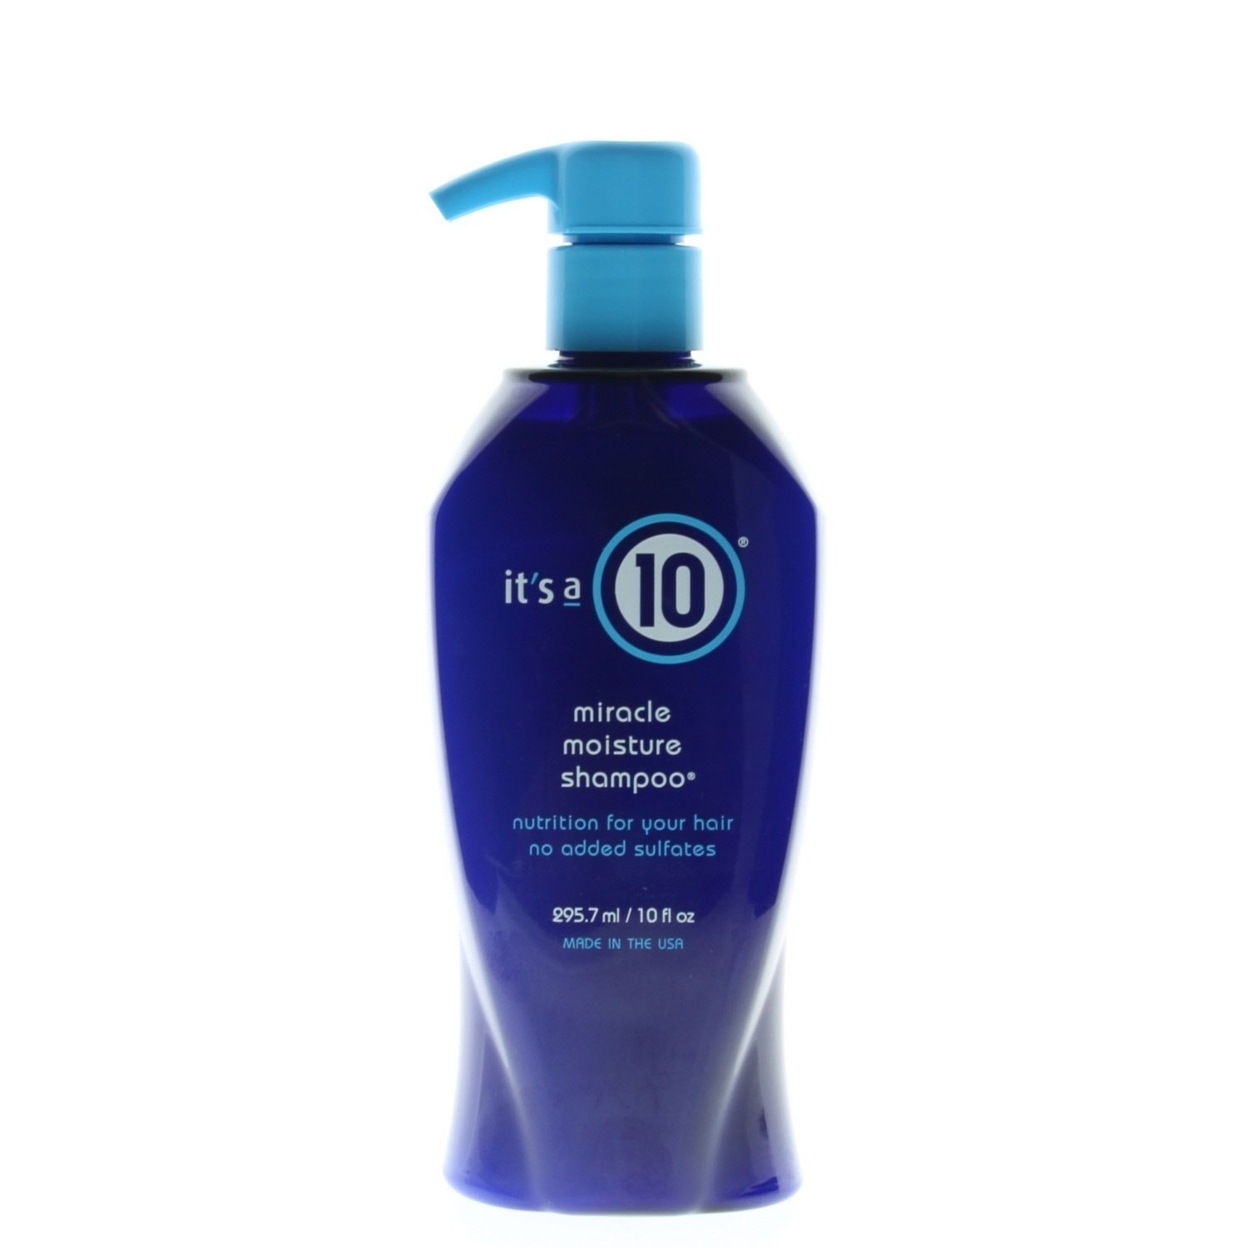 It's A 10 Miracle Moisture Shampoo 10oz/295.7ml